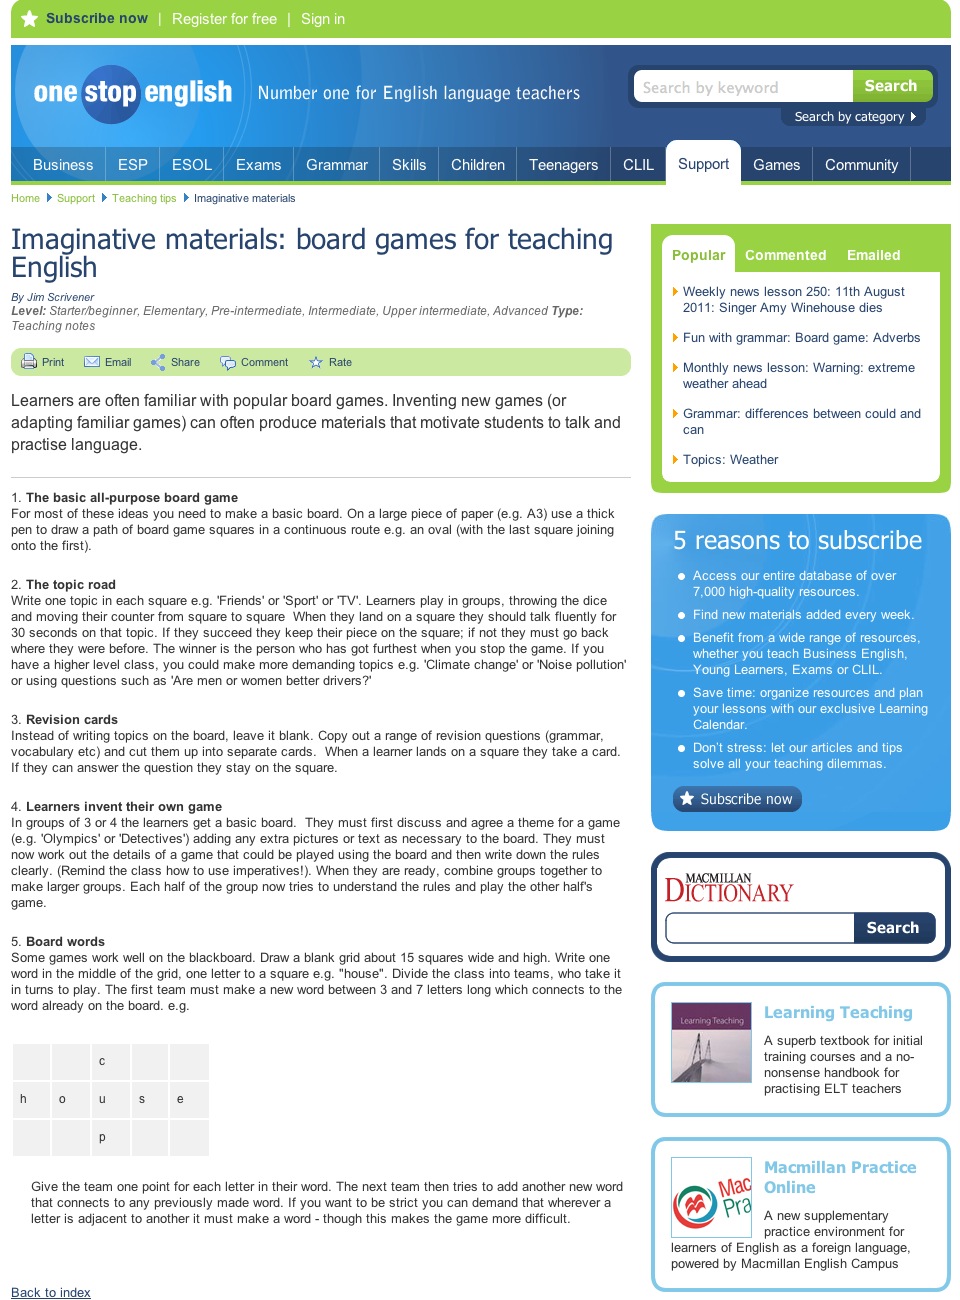 Imaginative materials: board games for teaching English | Recurso educativo 40030